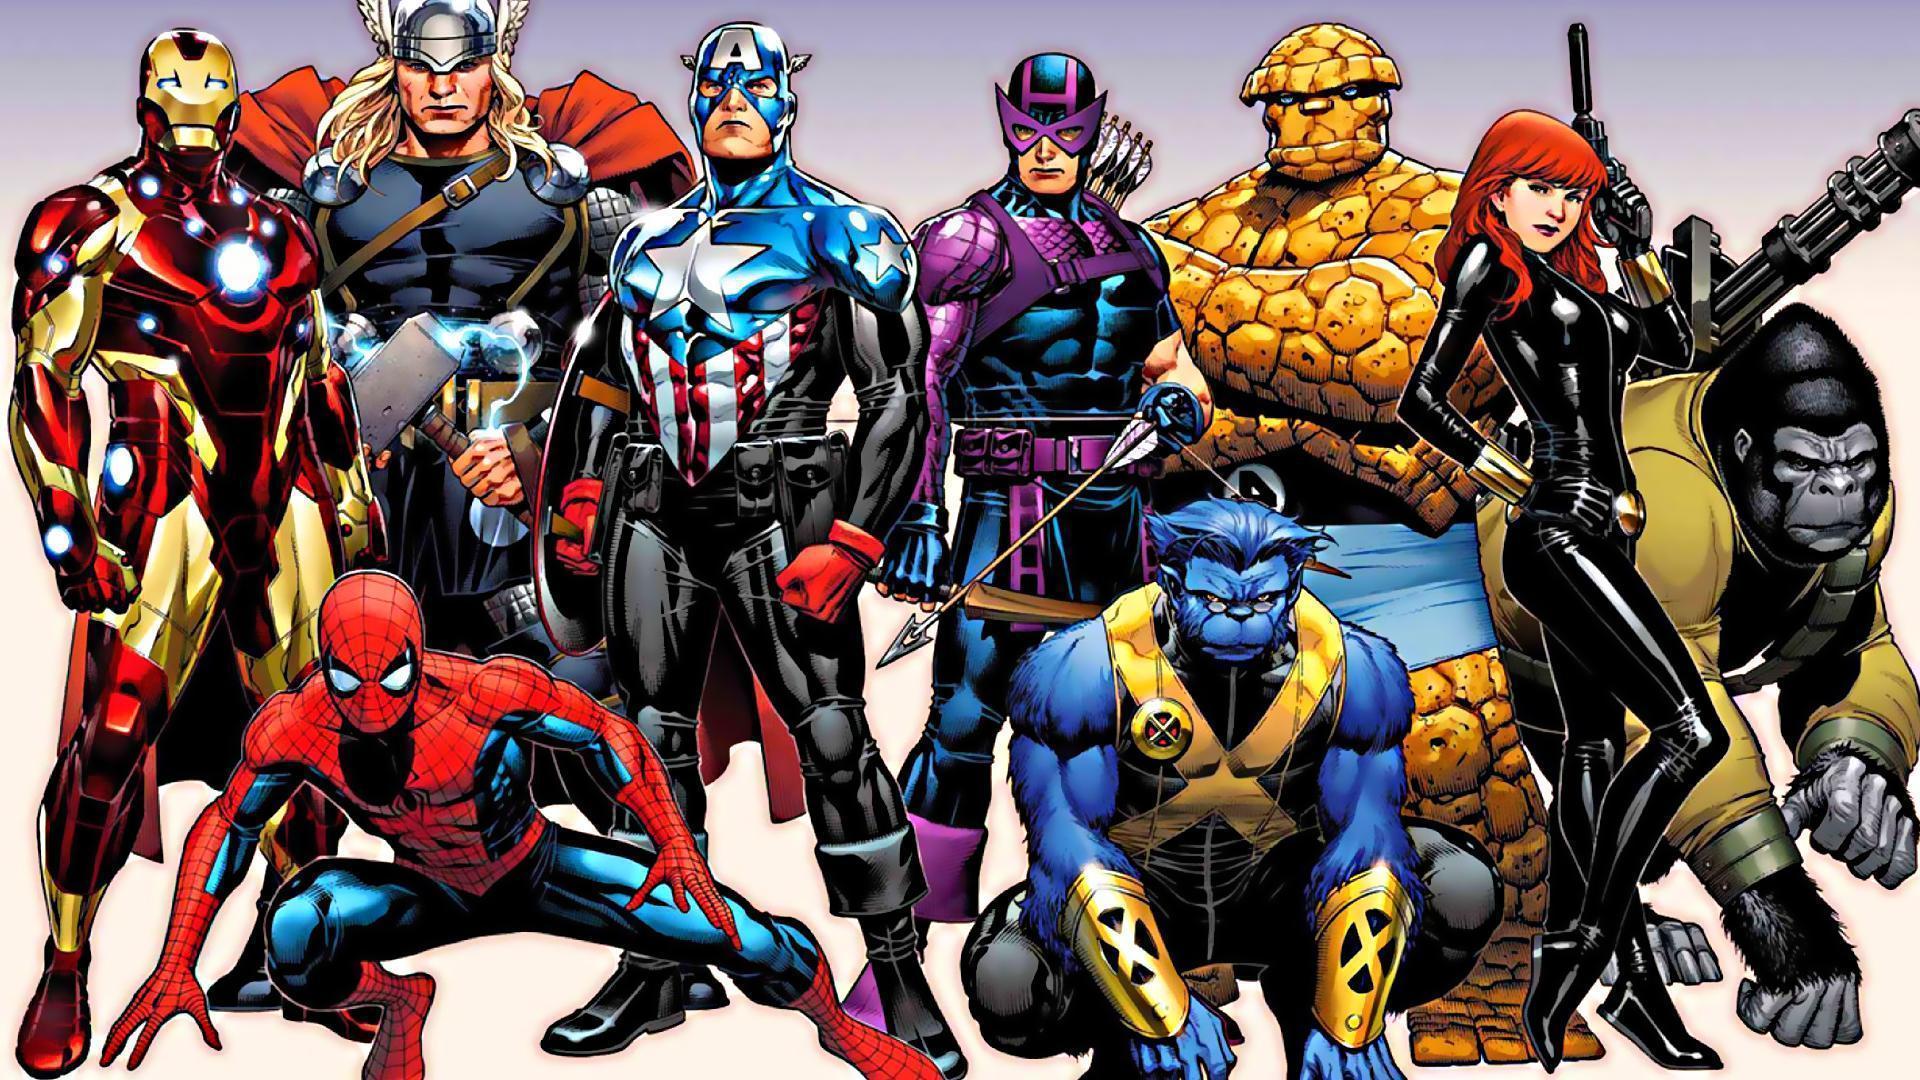 Cool Marvel Super Heroes